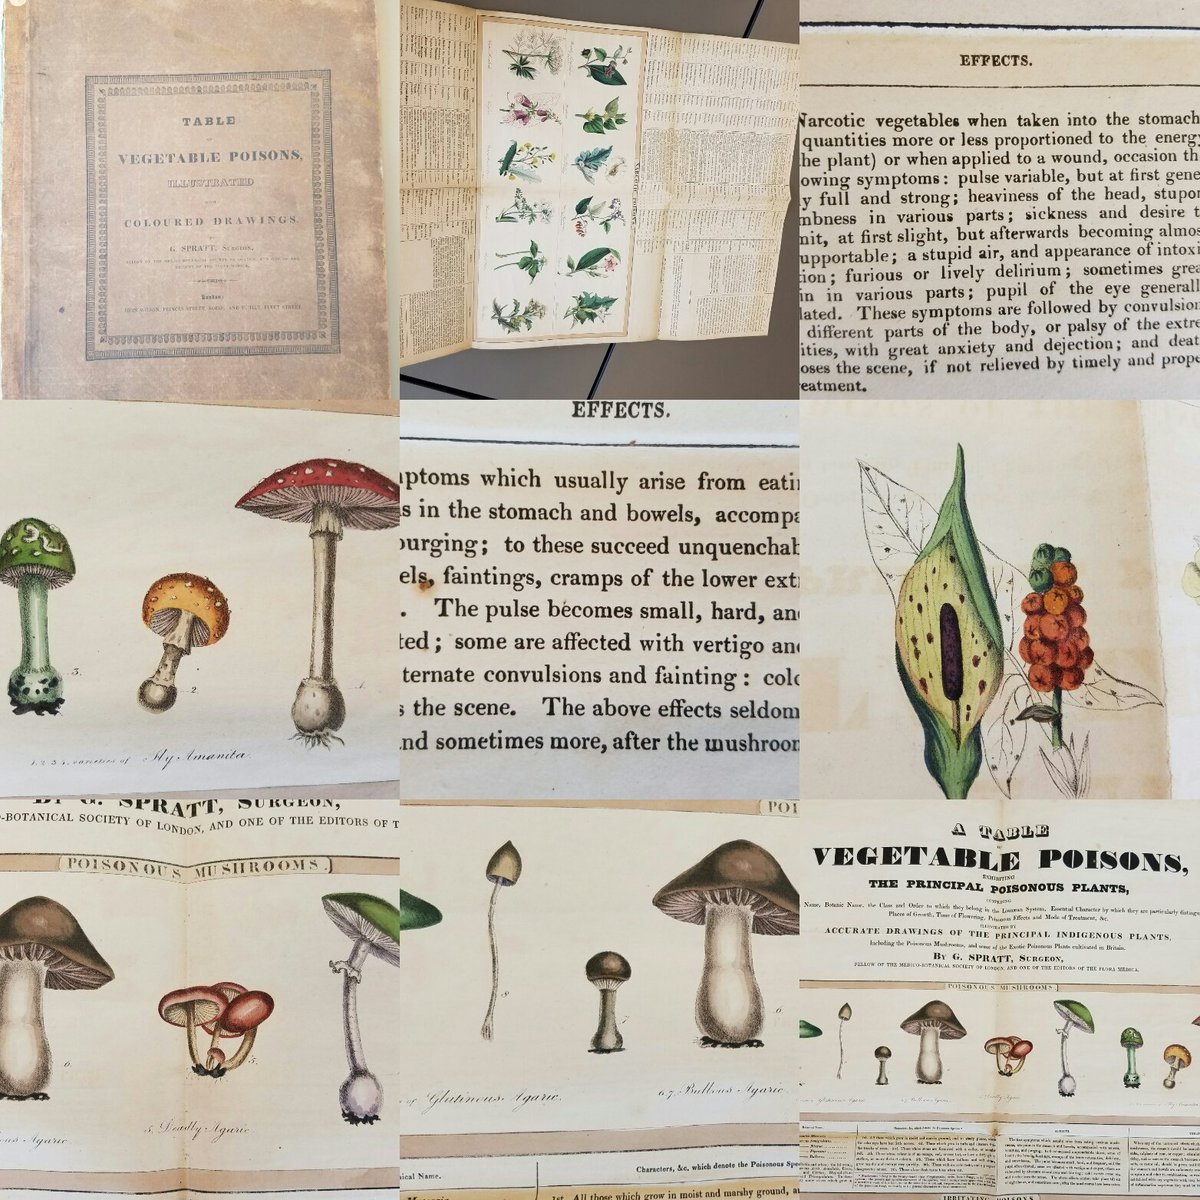 #shamelessself-promotionmonth @Sutrolibrary one of many gorgeous botanical&medical books.Lithographs,1843.